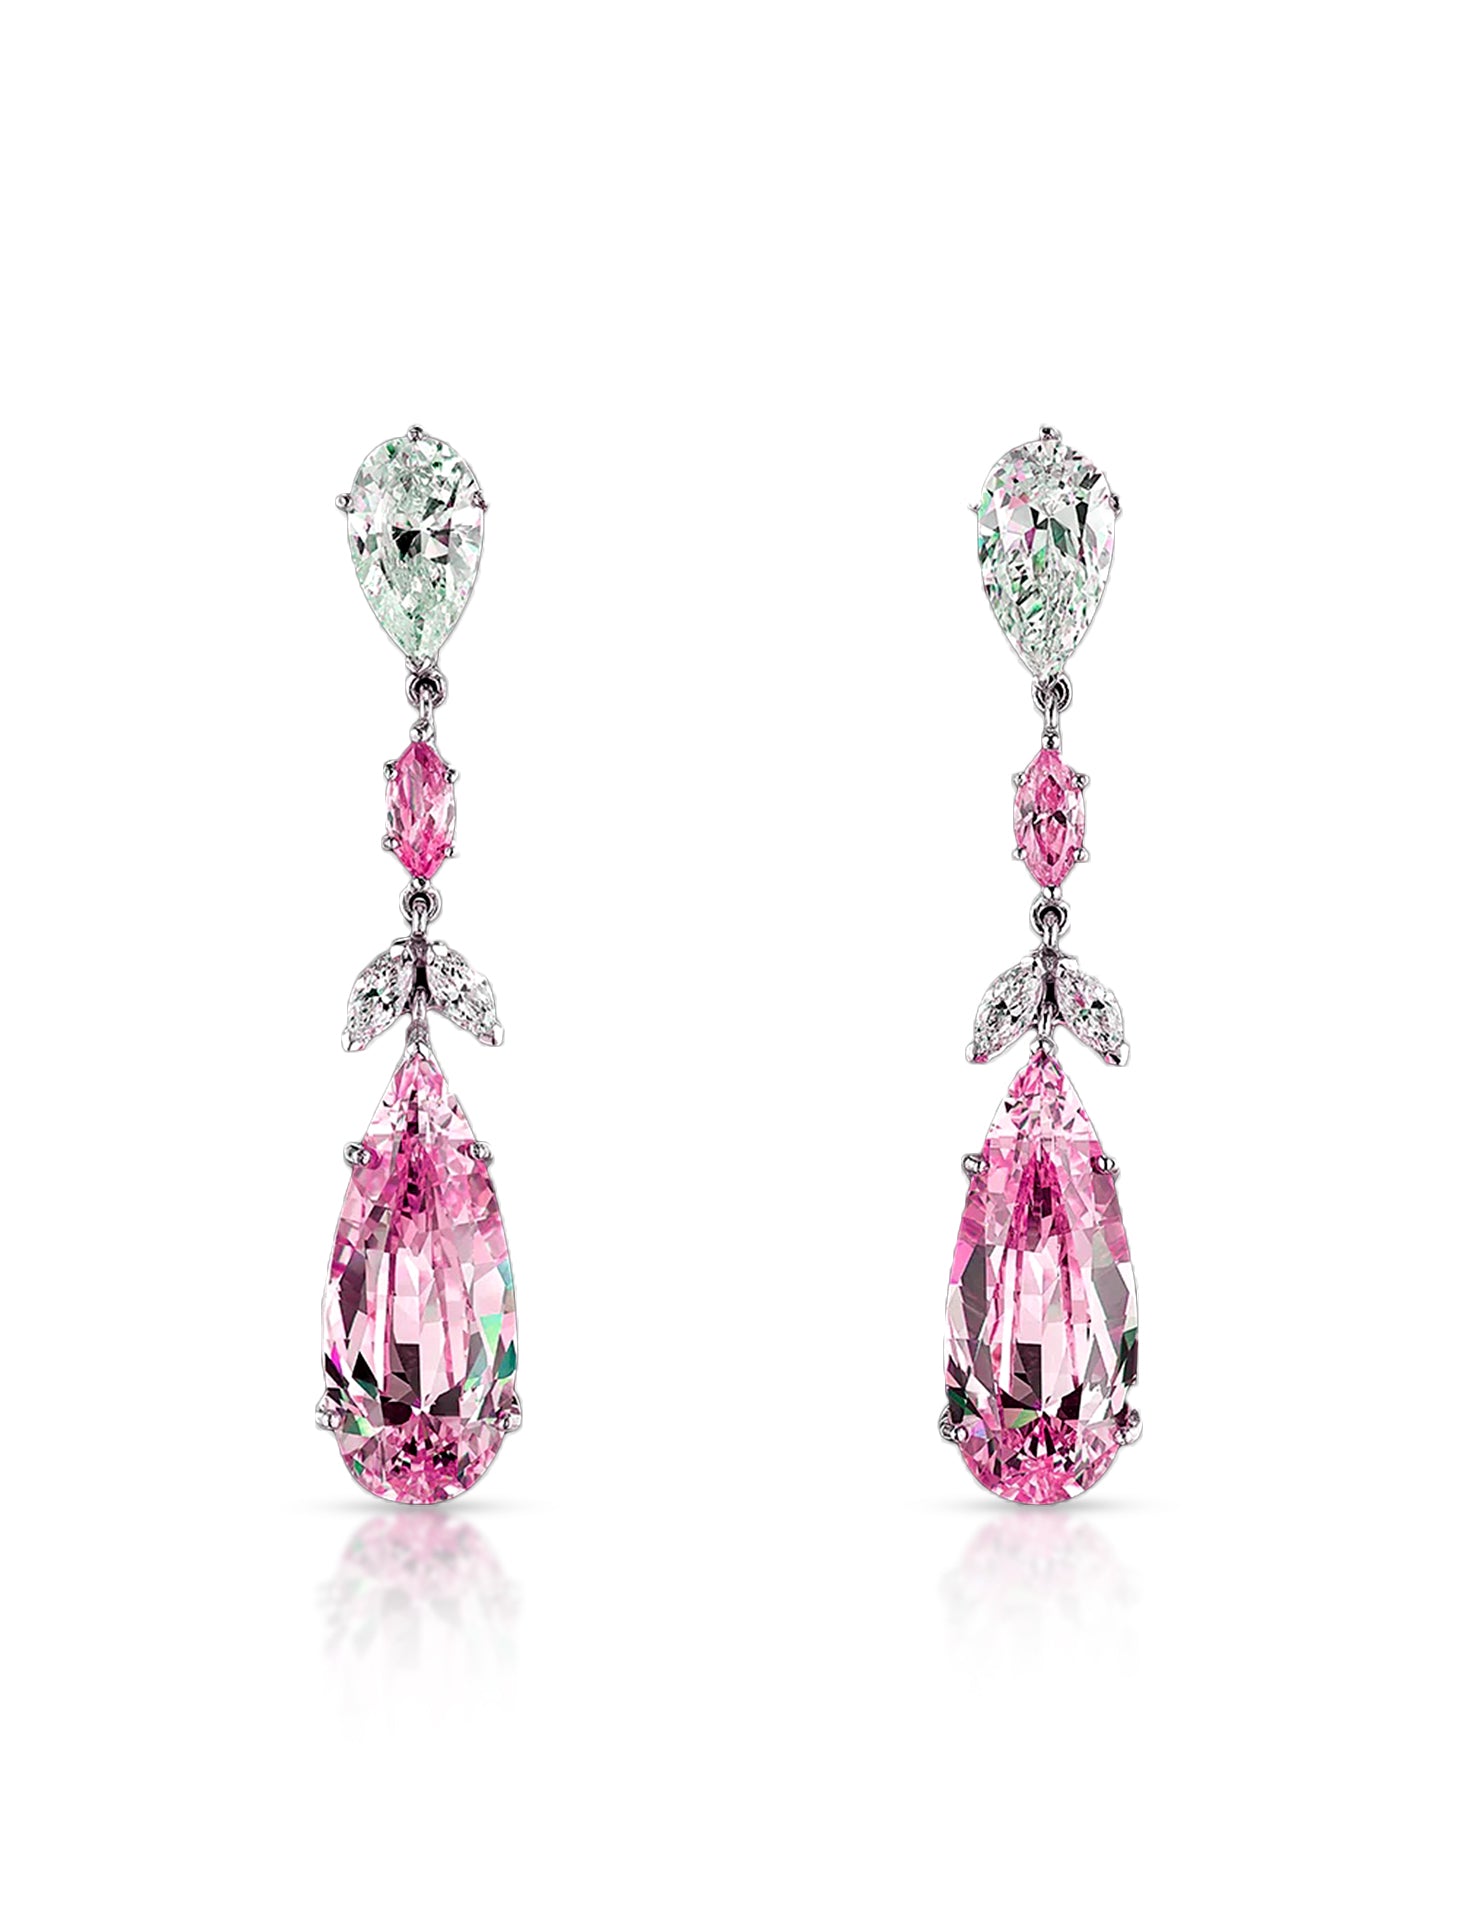 Blush Calla Lily, 18K White Gold, Pink Sapphires + Diamond Earrings